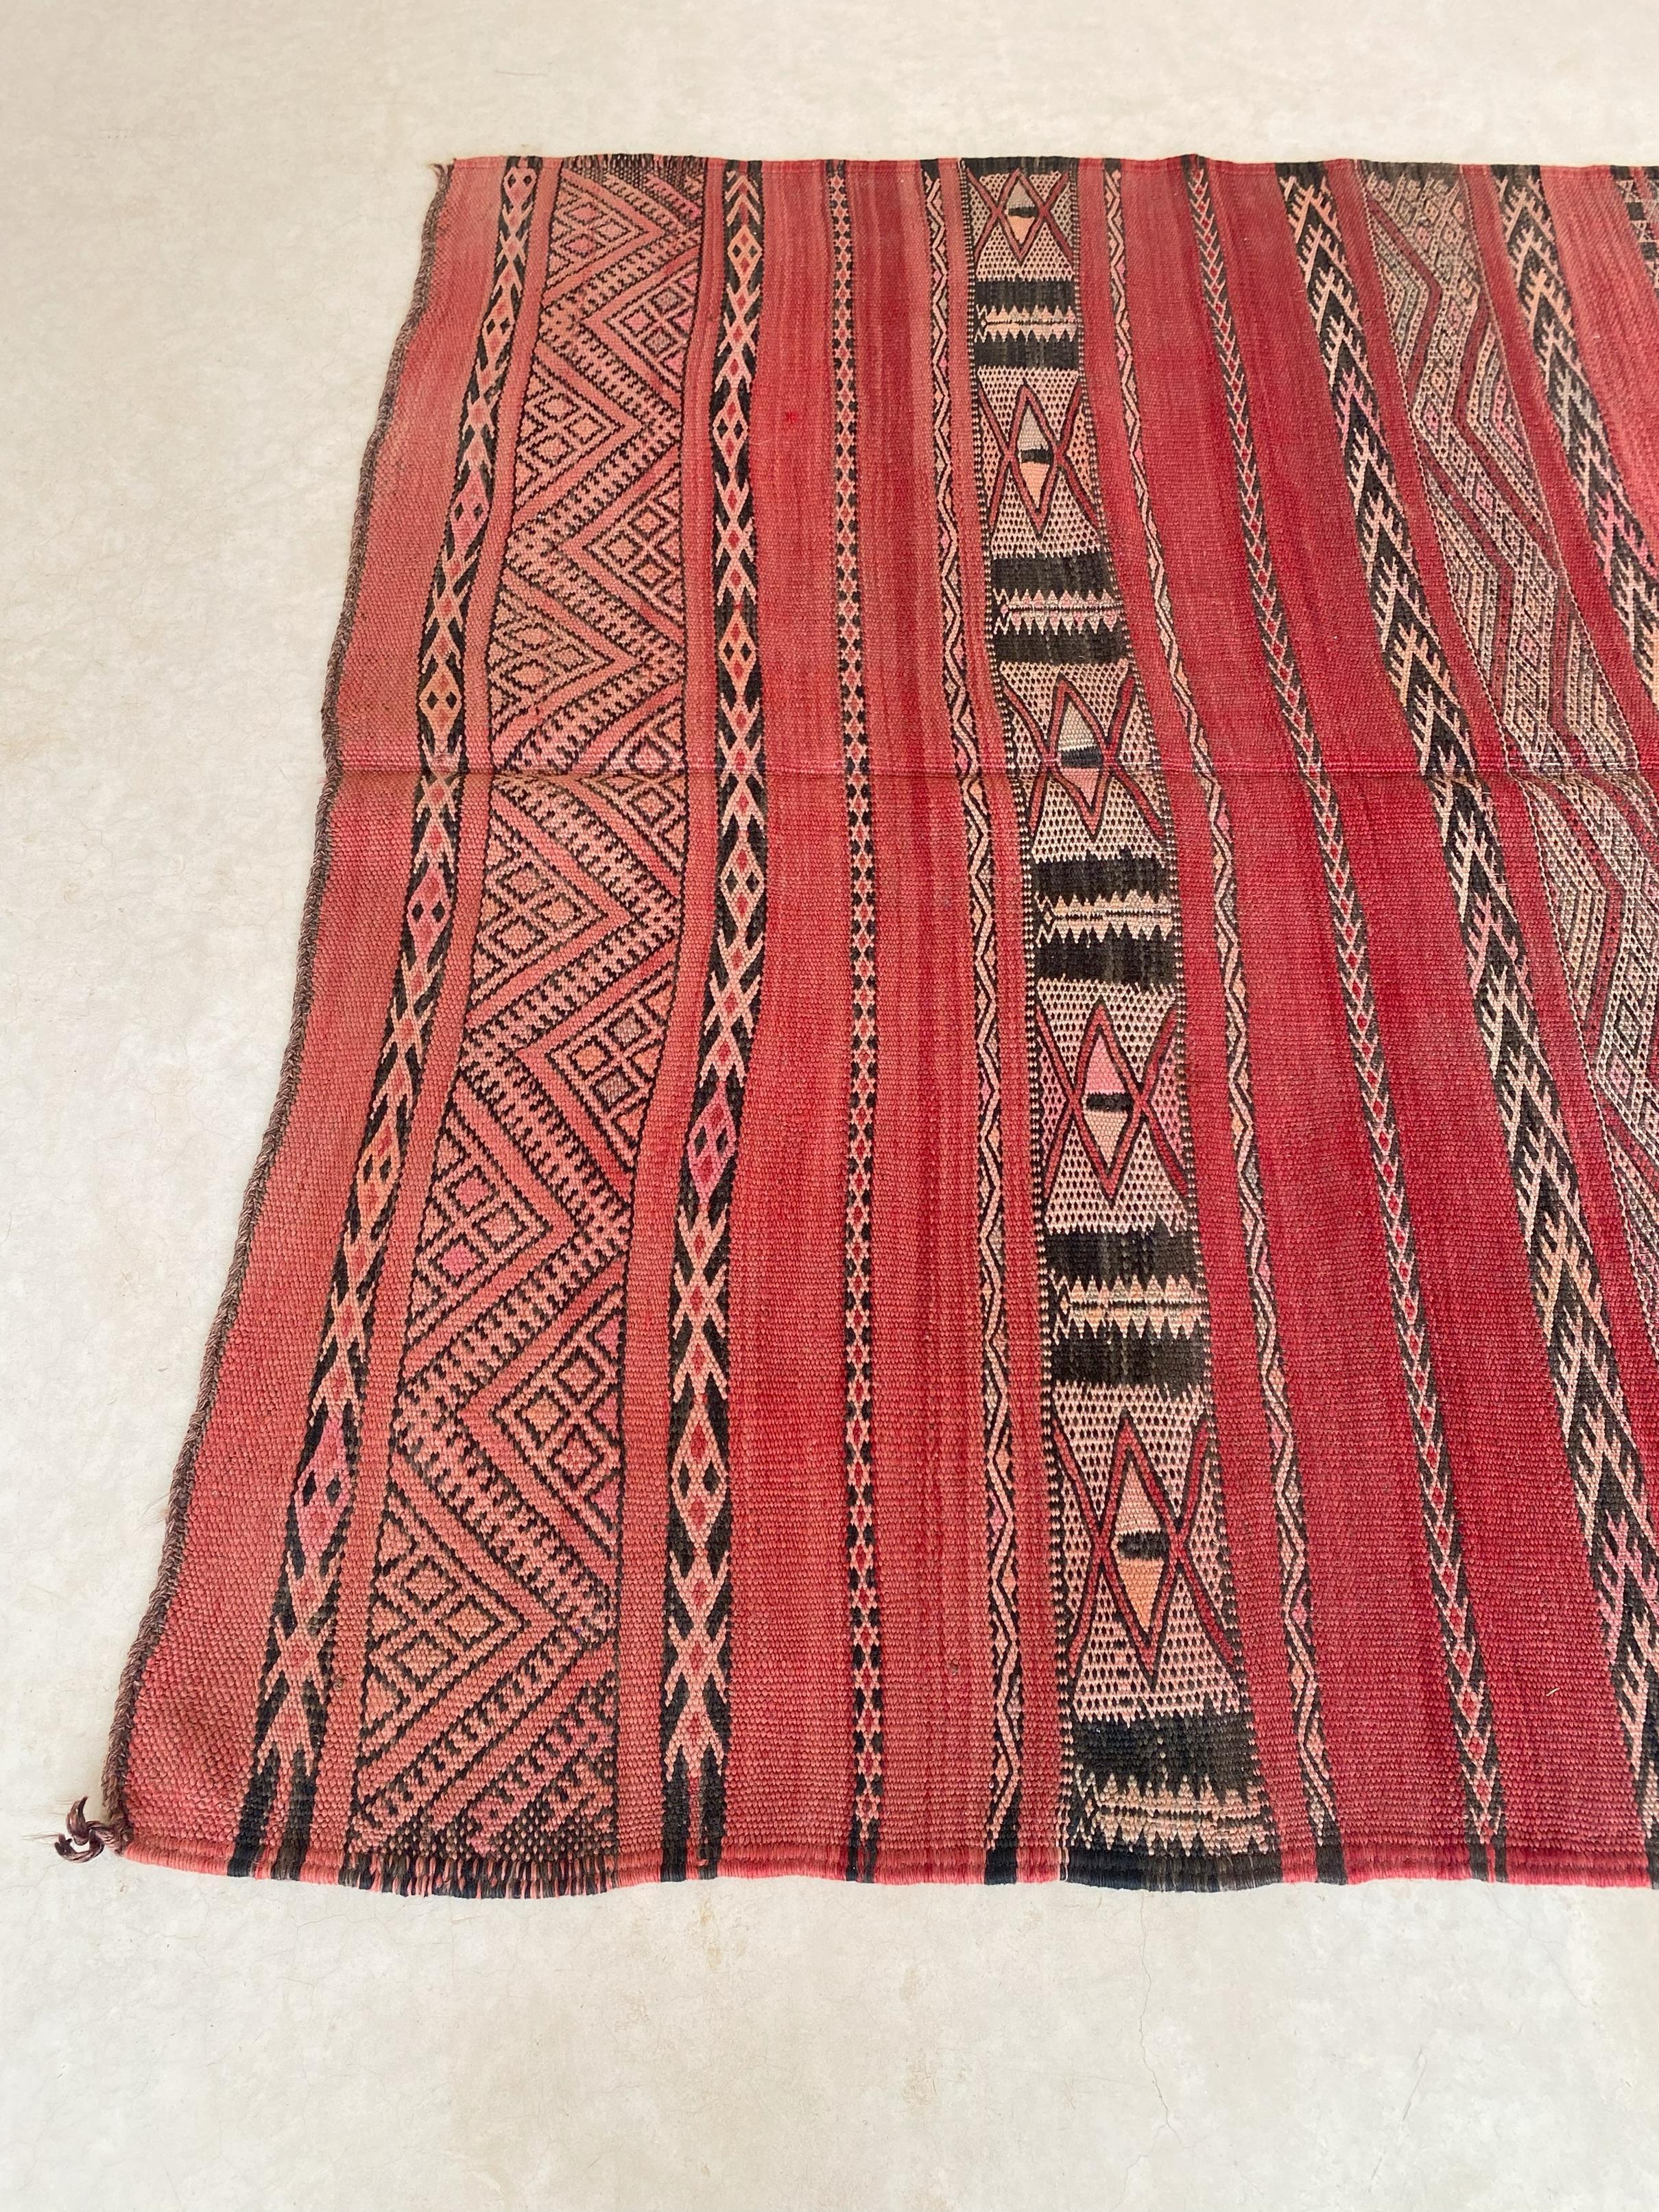 Vintage Moroccan Kilim rug - Red - 5x9.2feet / 152x282cm For Sale 1